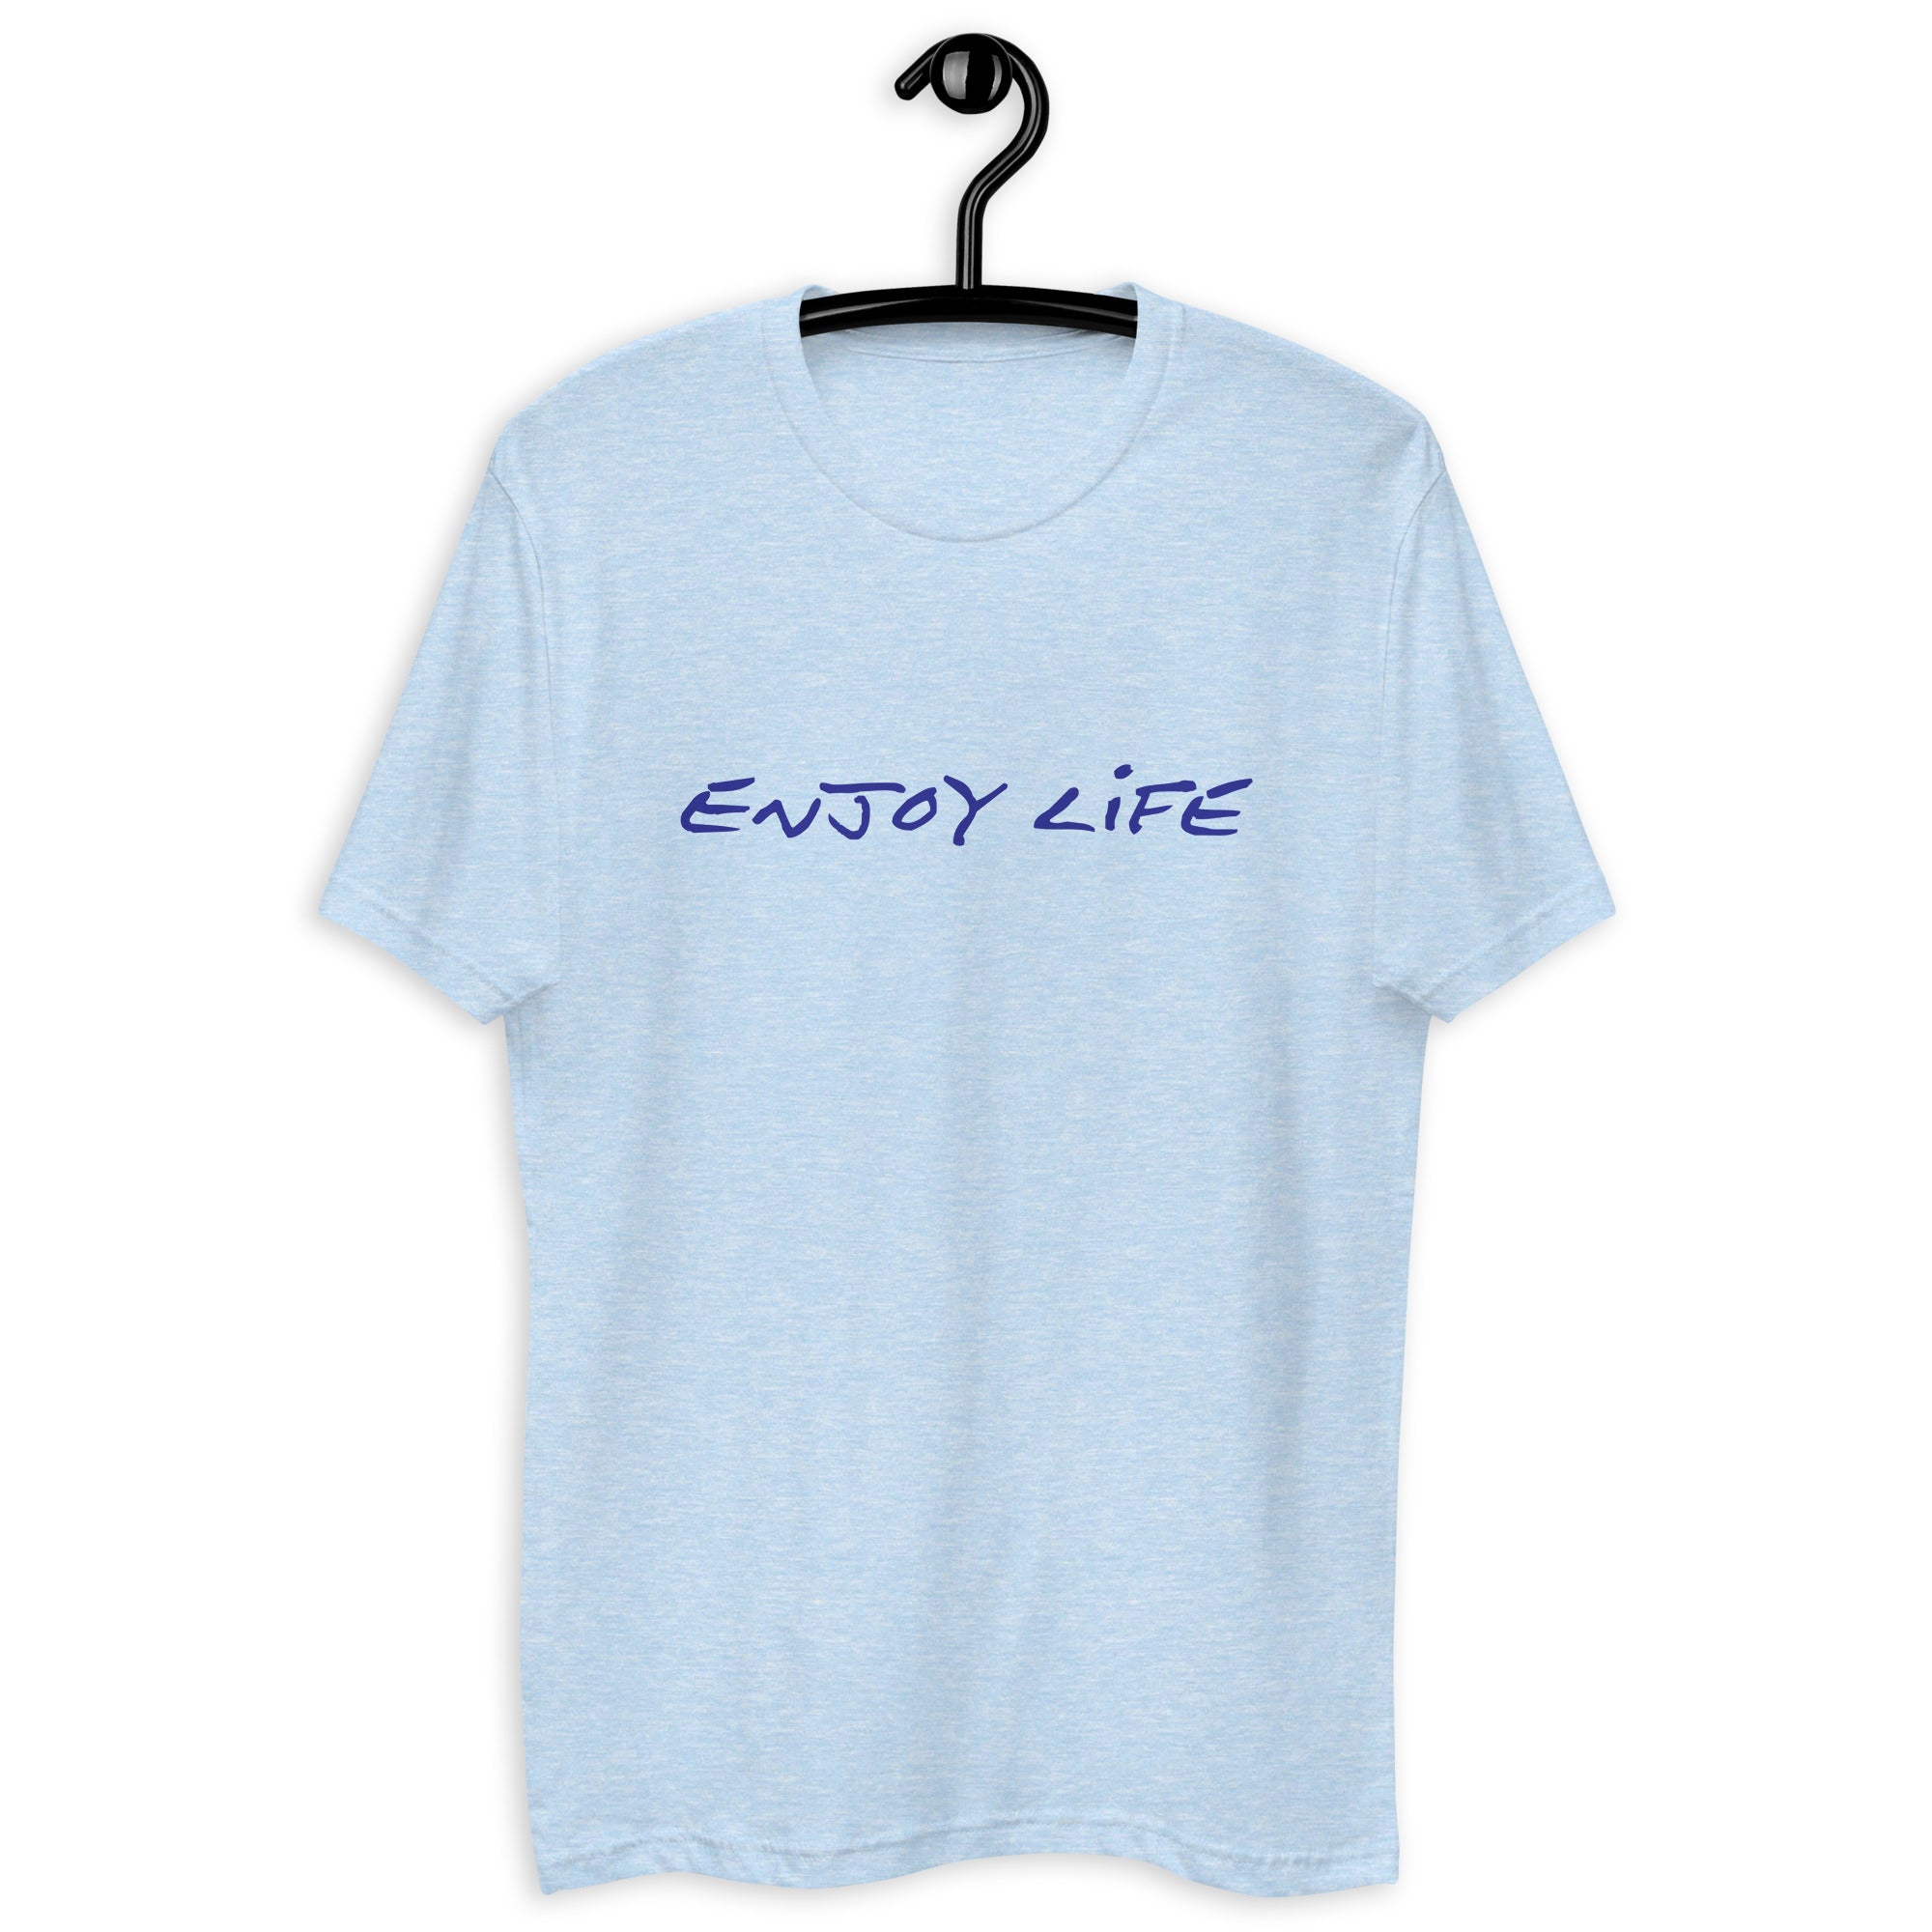 ENJOY LIFE | BLUE - Men's Fitted T-Shirt - Next Level 3600